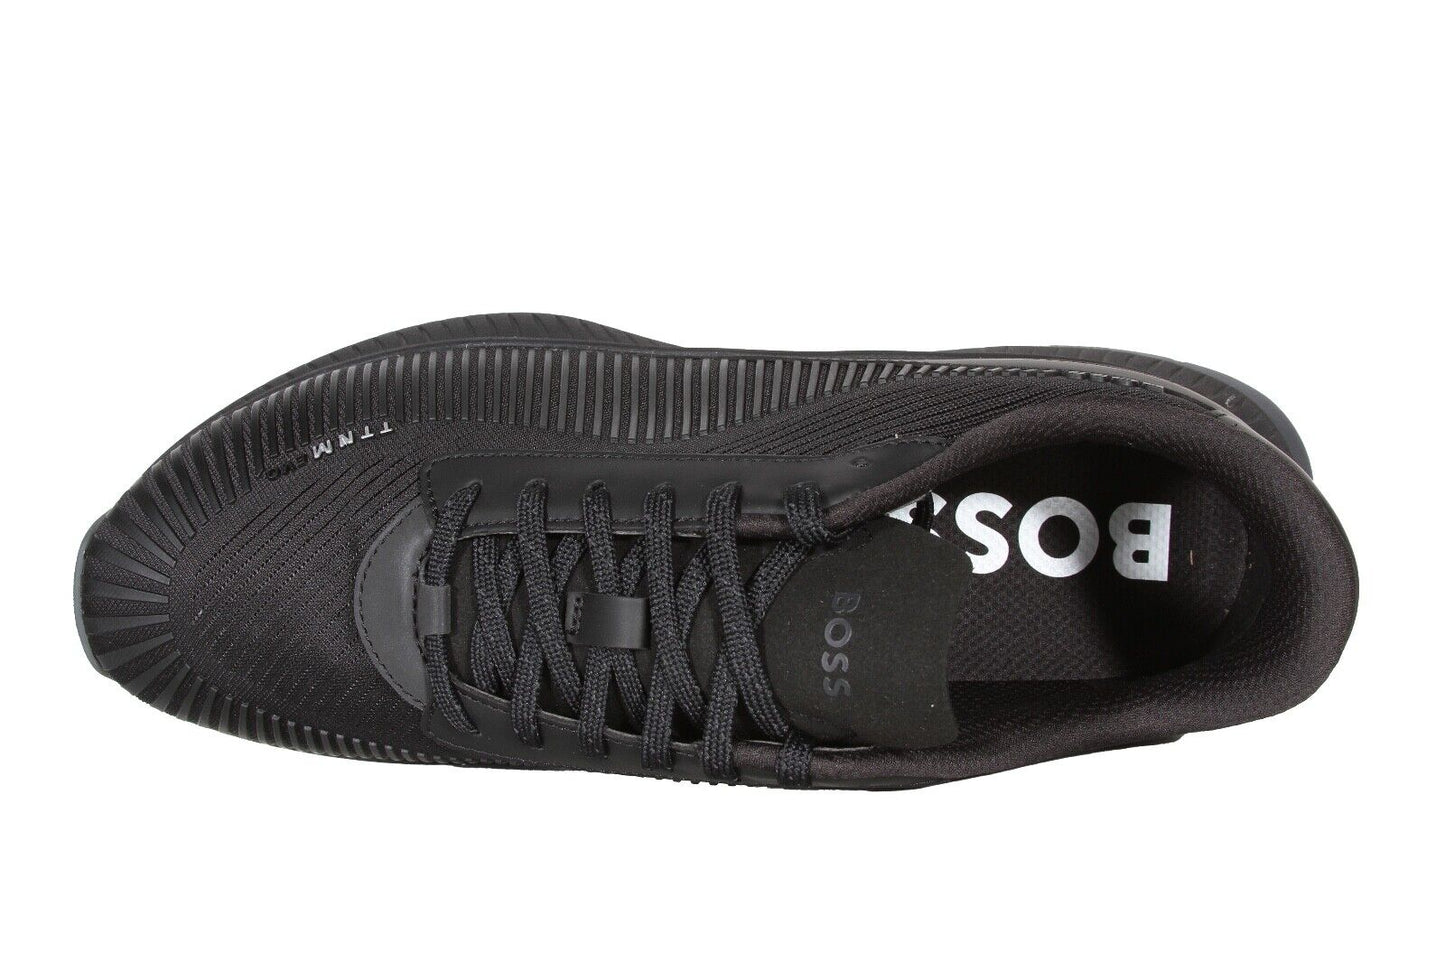 HUGO BOSS TTNM EVO_Runn_metpBB Men’s Sneakers in Black 50503493-005